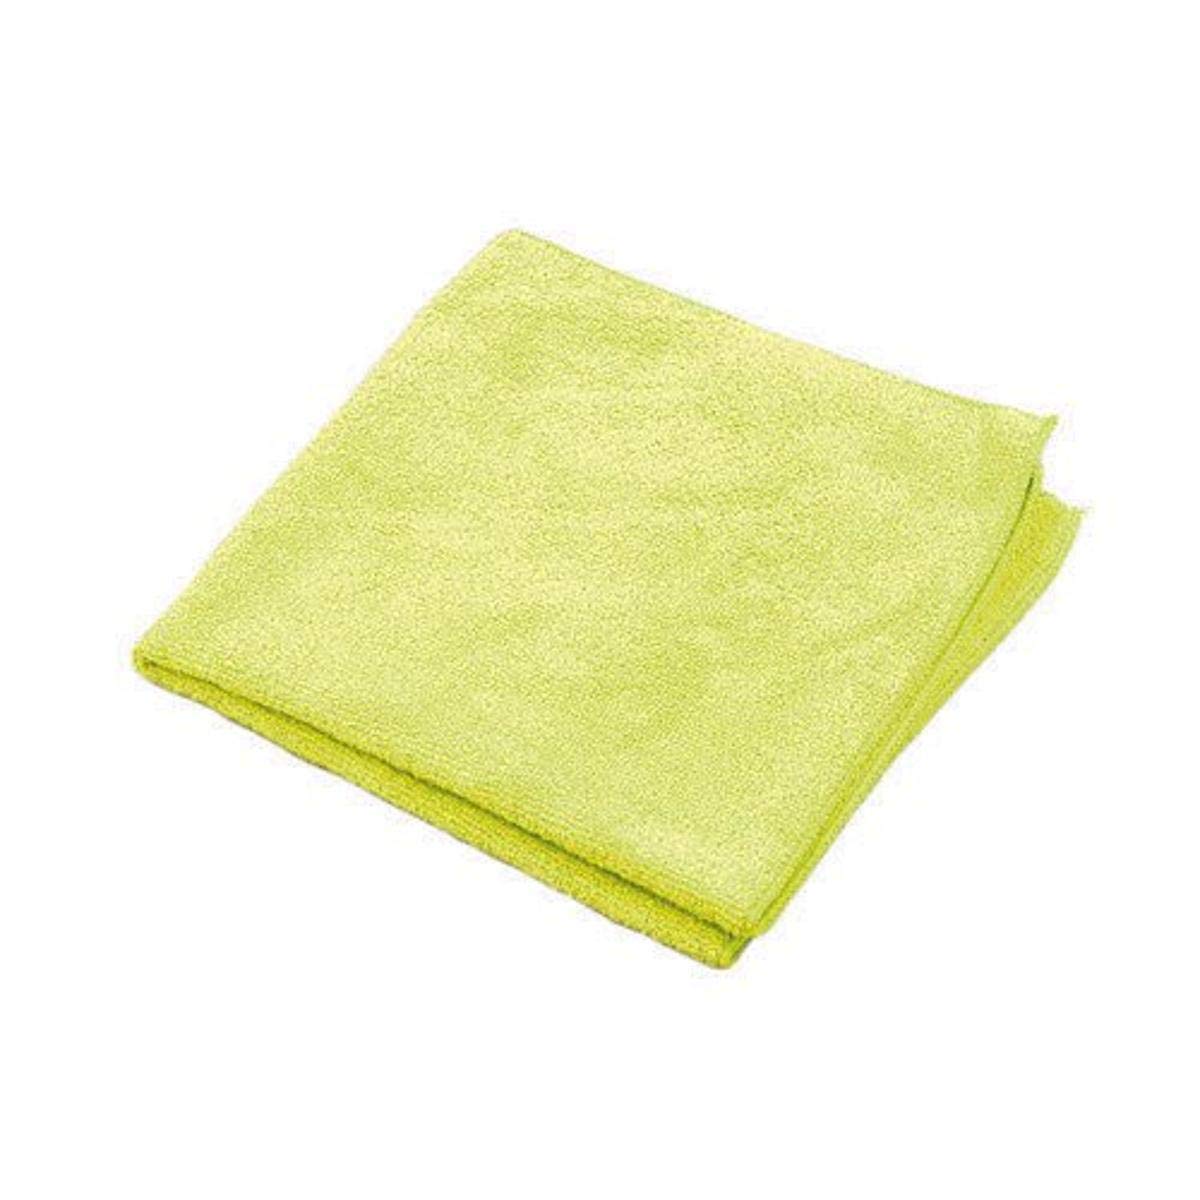 12/bg Yellow Microfiber 16x16 Cloth, lightweight